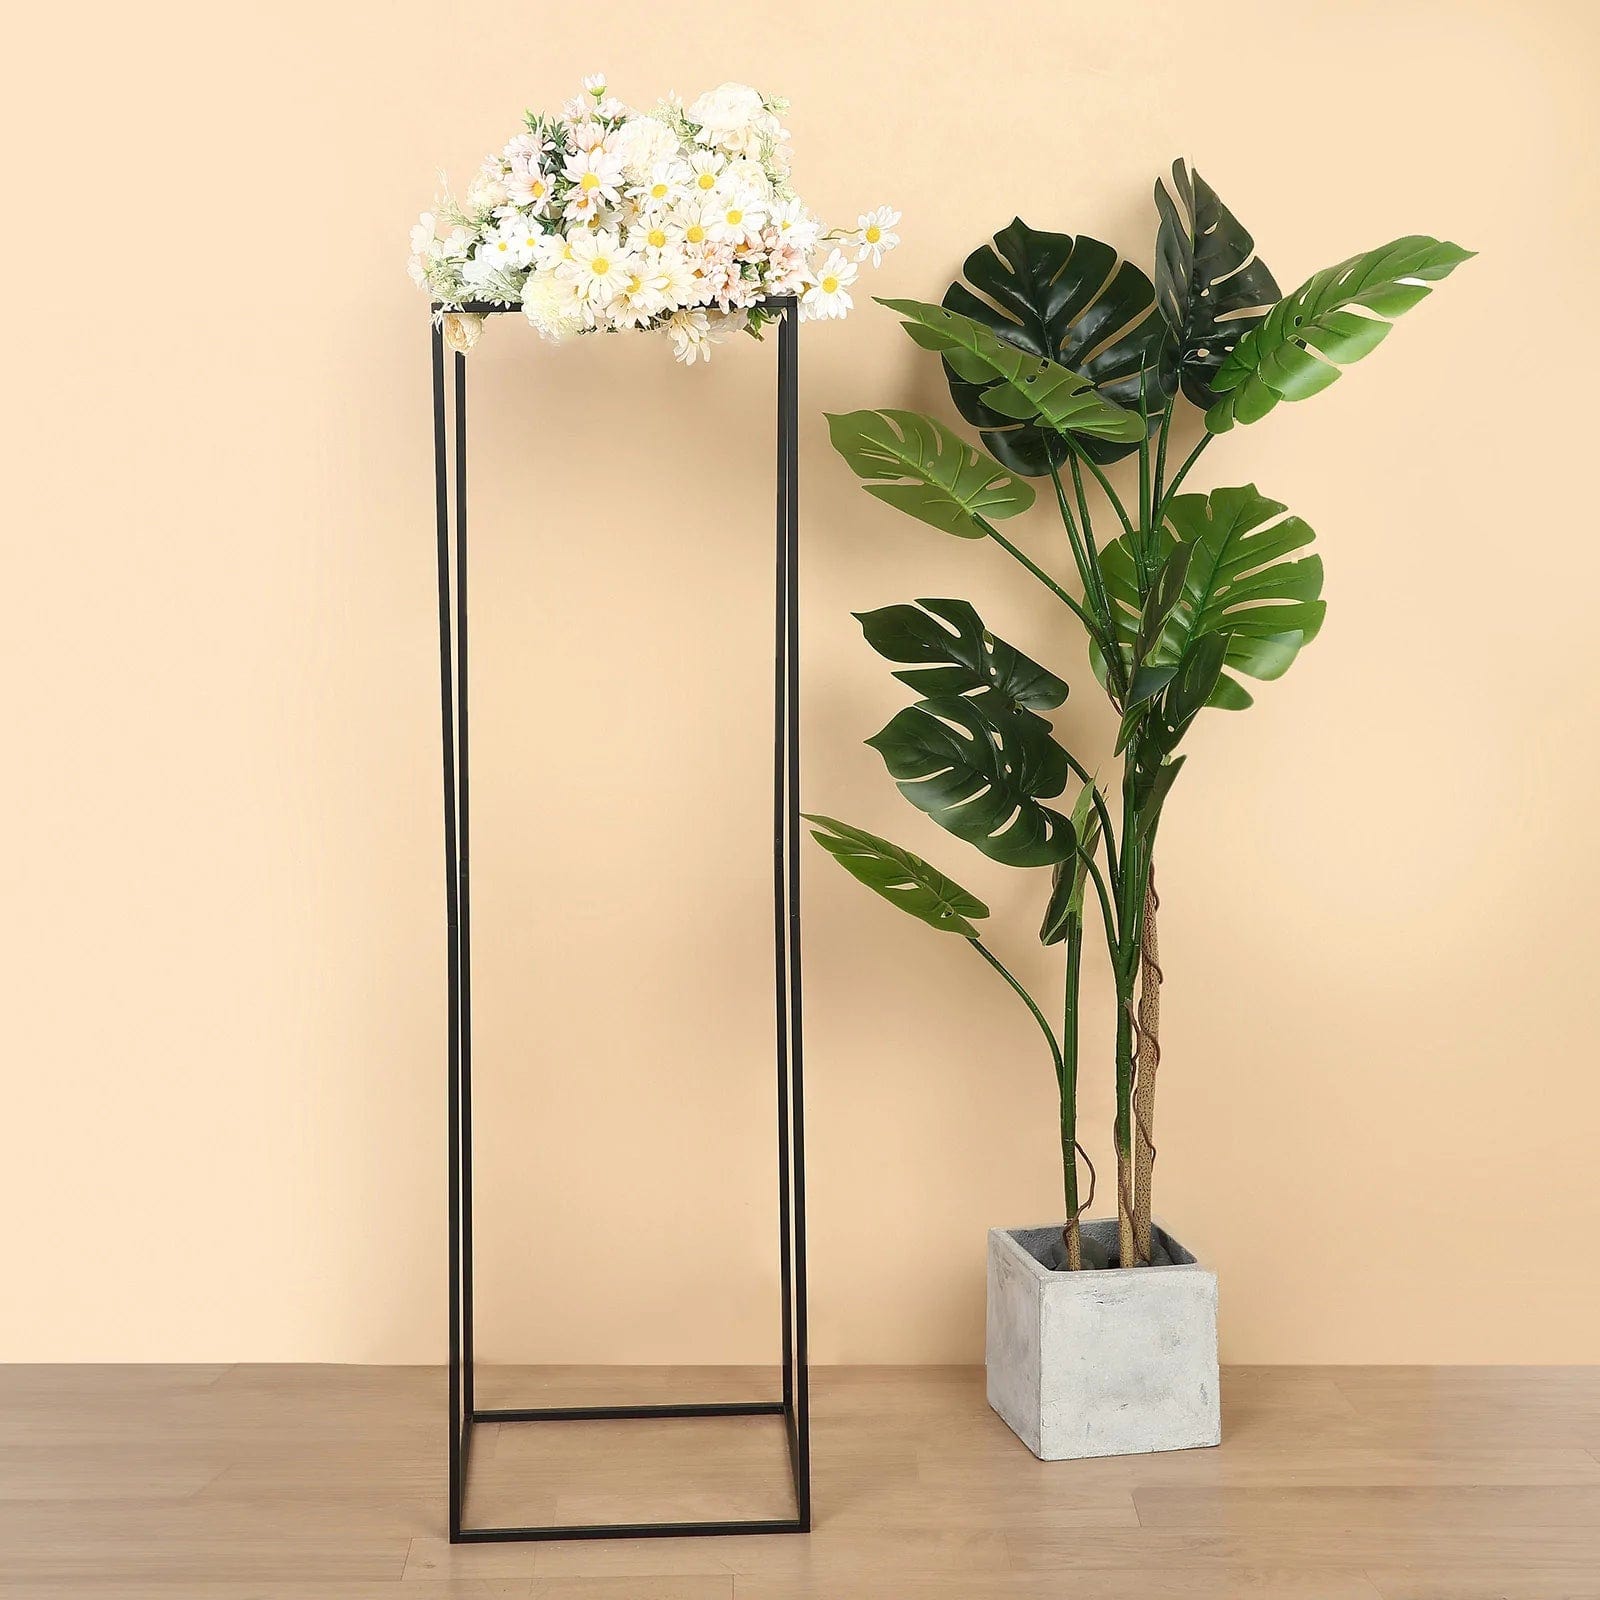 2 Rectangular 48 in tall Metal Geometric Flower Stands Centerpieces